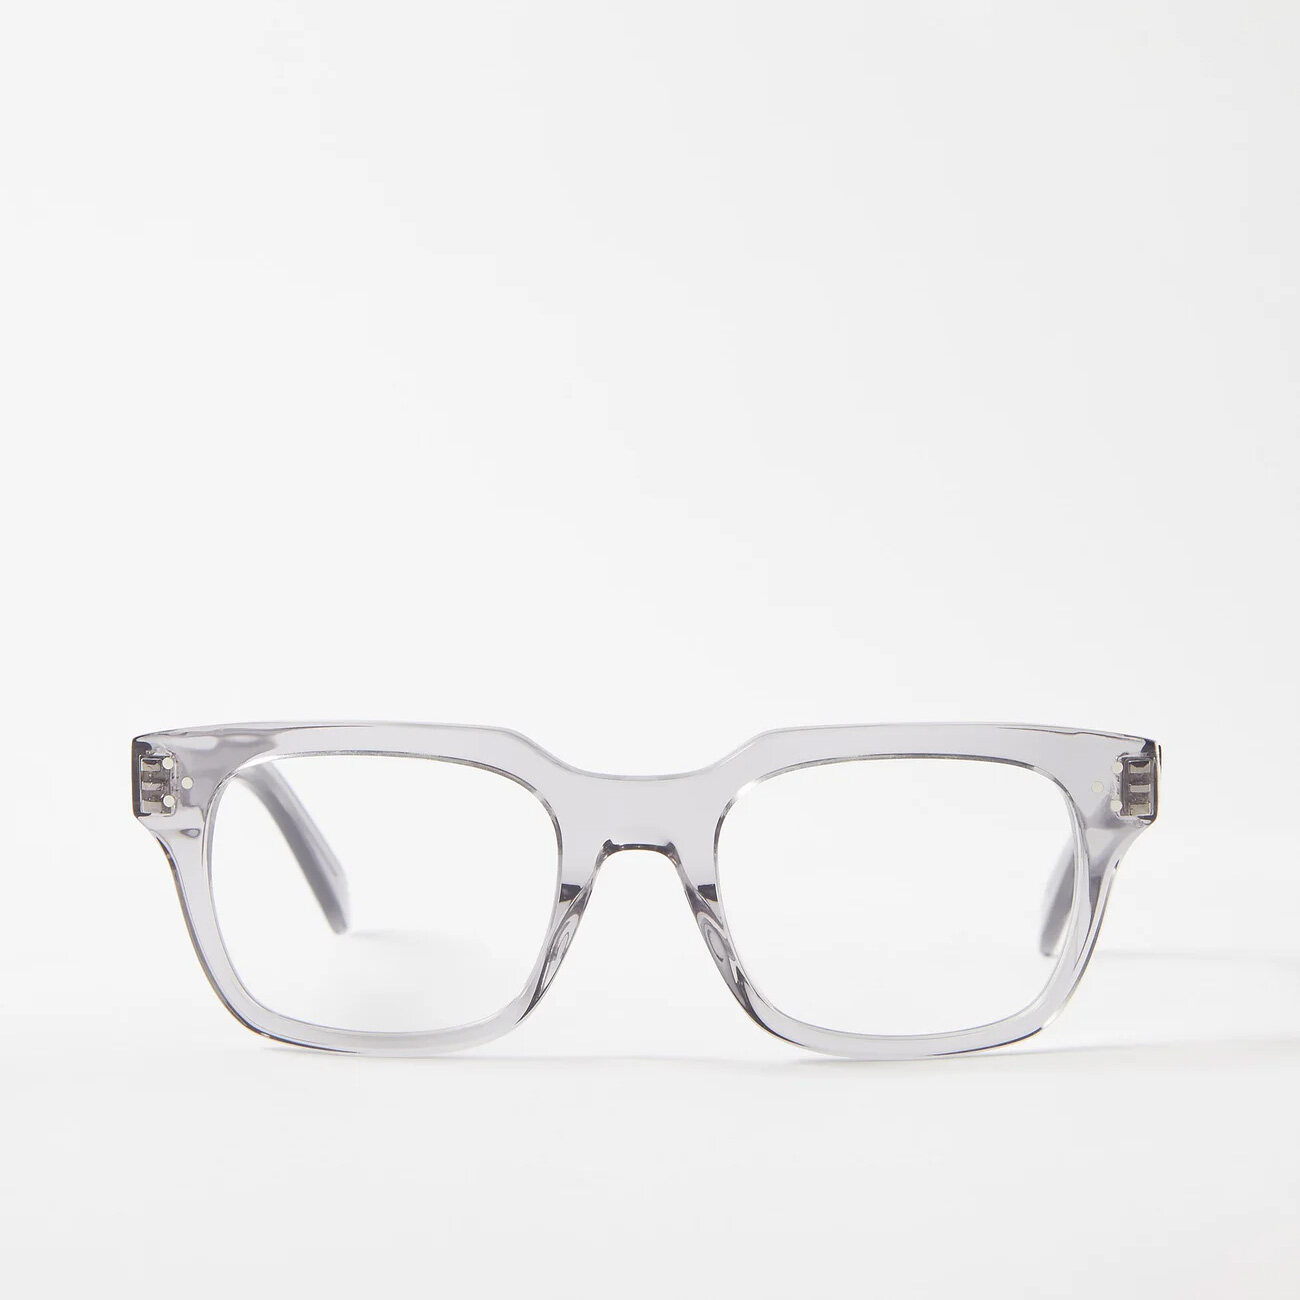 CELINE EYEWEAR D-frame acetate glasses